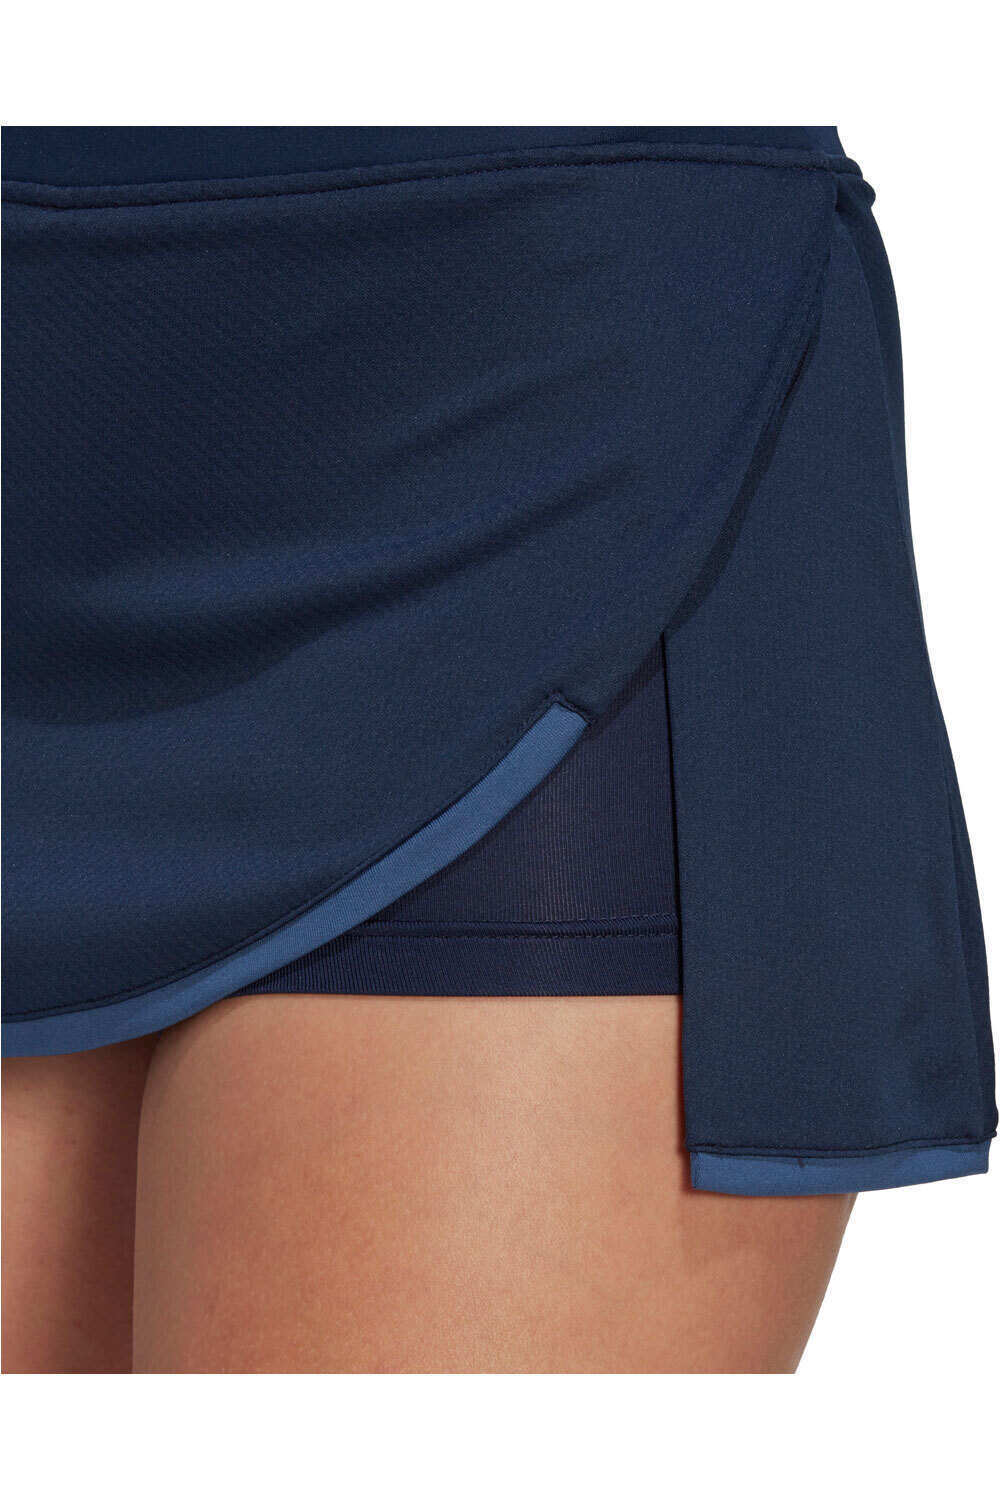 adidas falda tenis CLUB SKIRT vista detalle